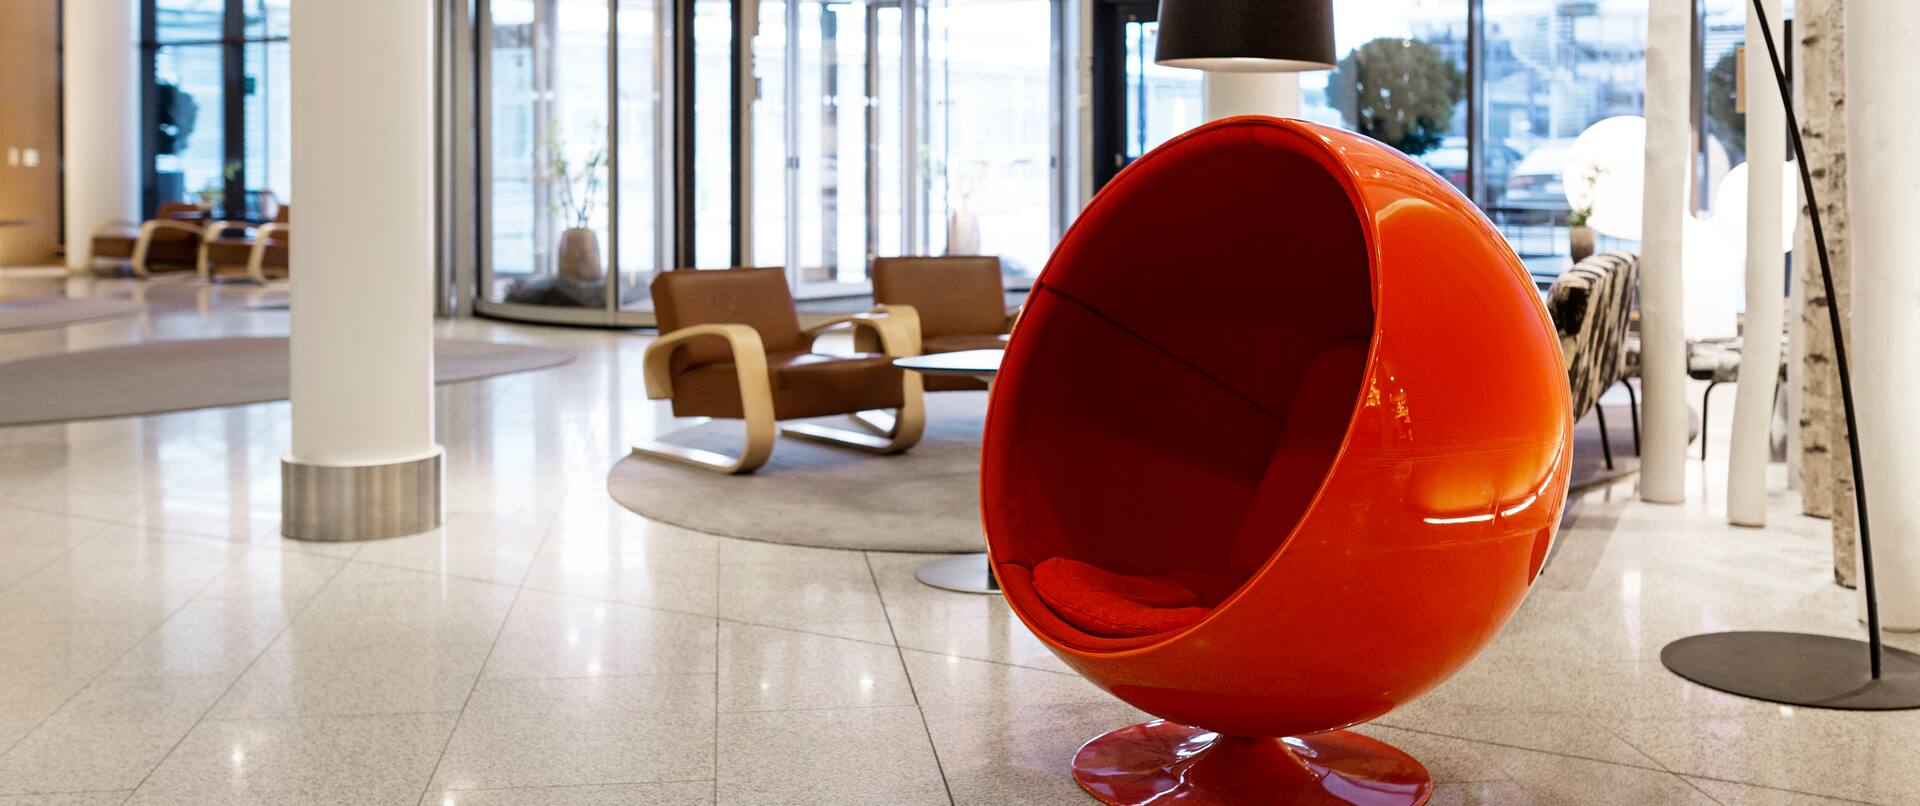 Rode stoel in lobby